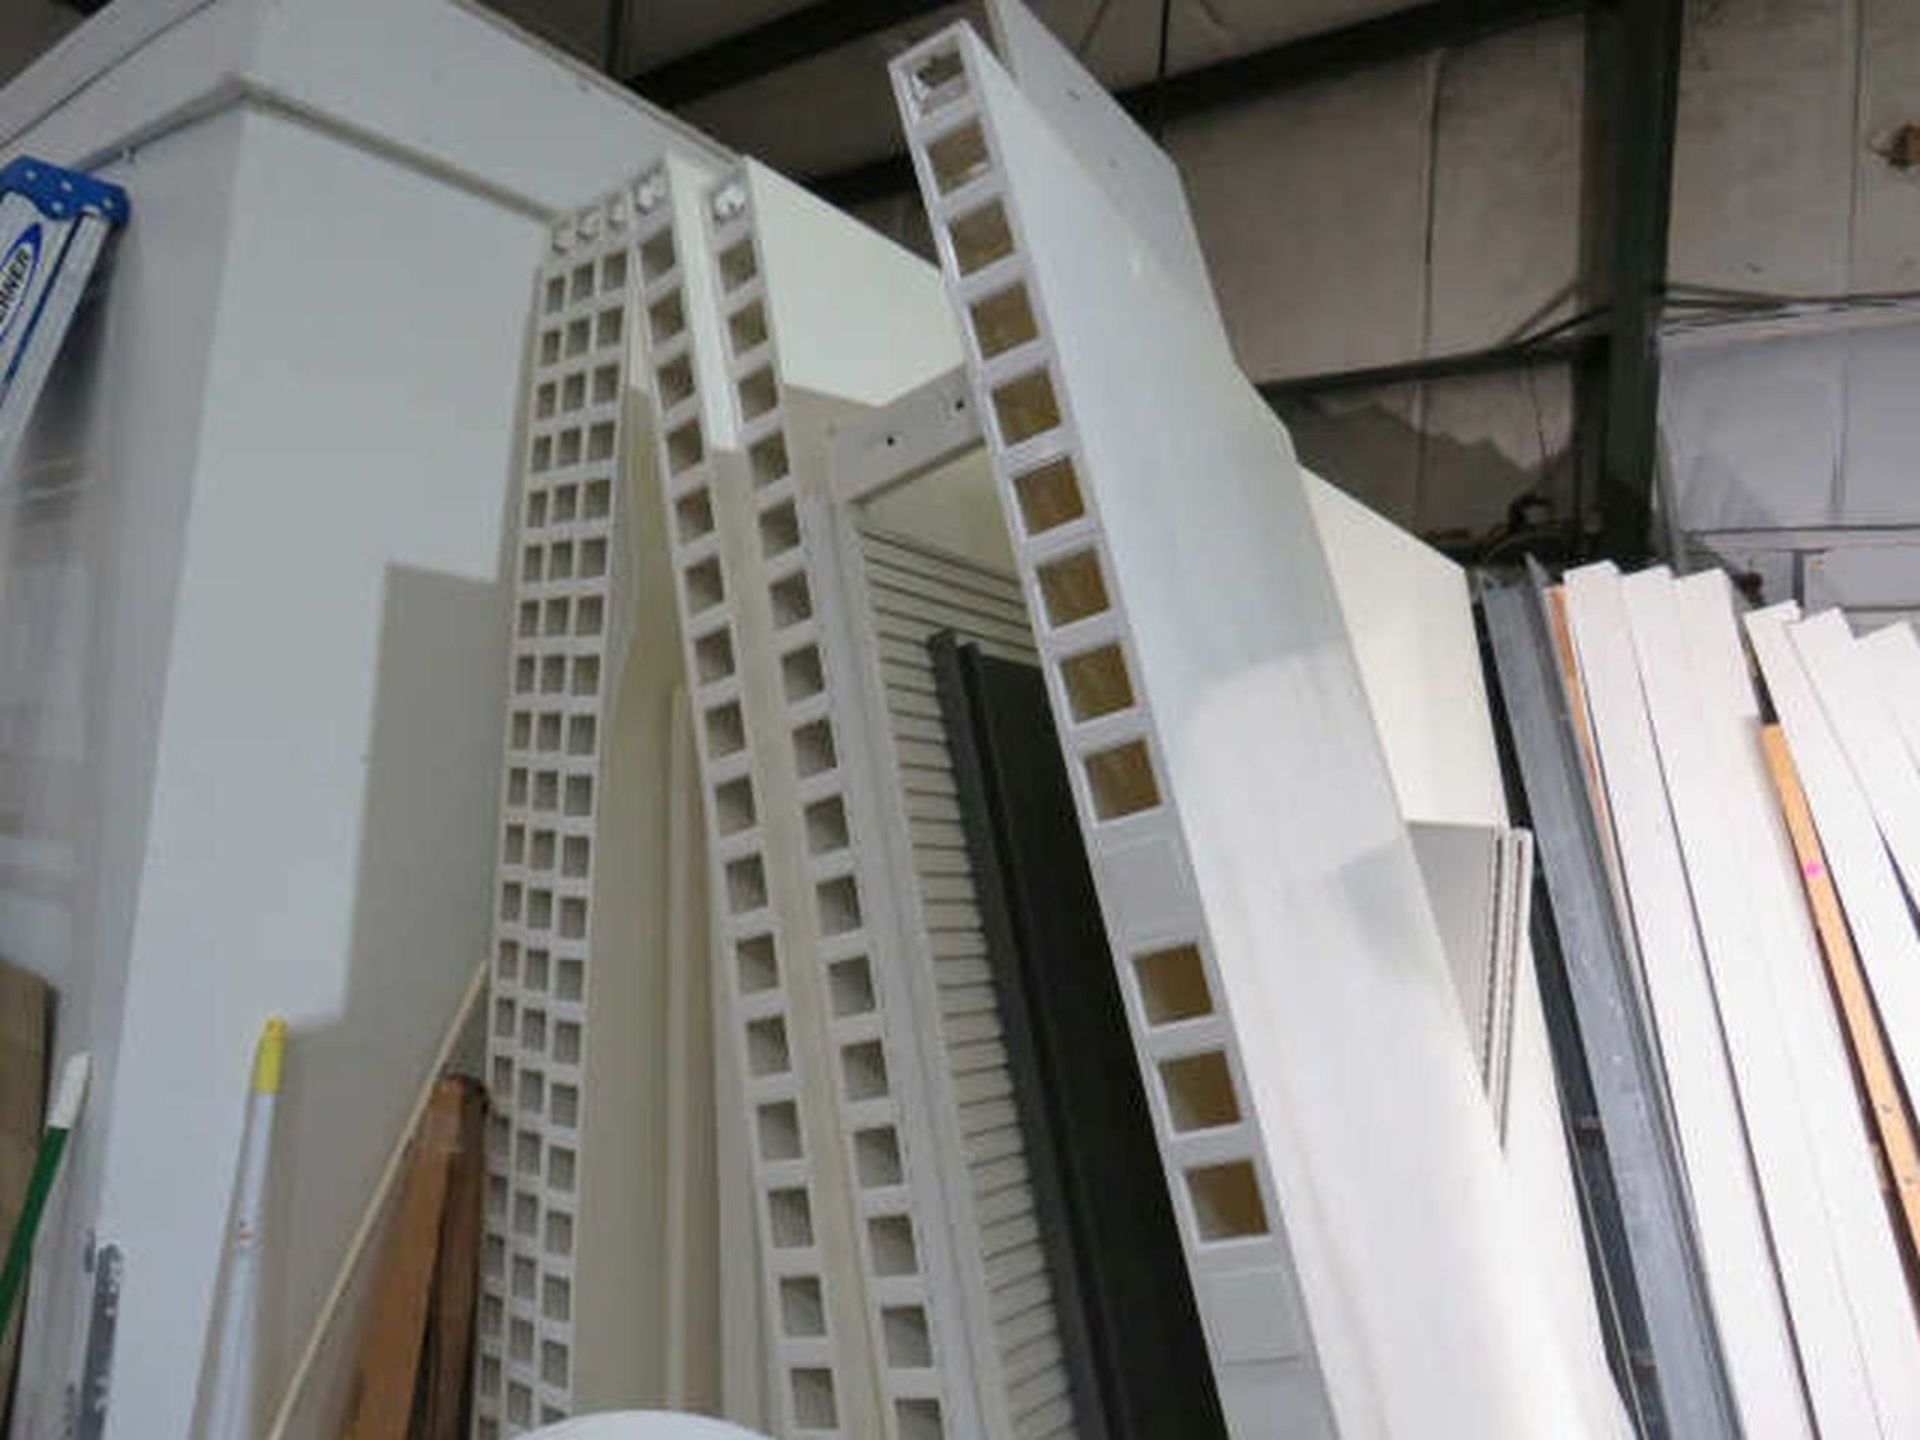 PVC Panels, Honeycomb 4'x8'x3”thick - Image 2 of 2